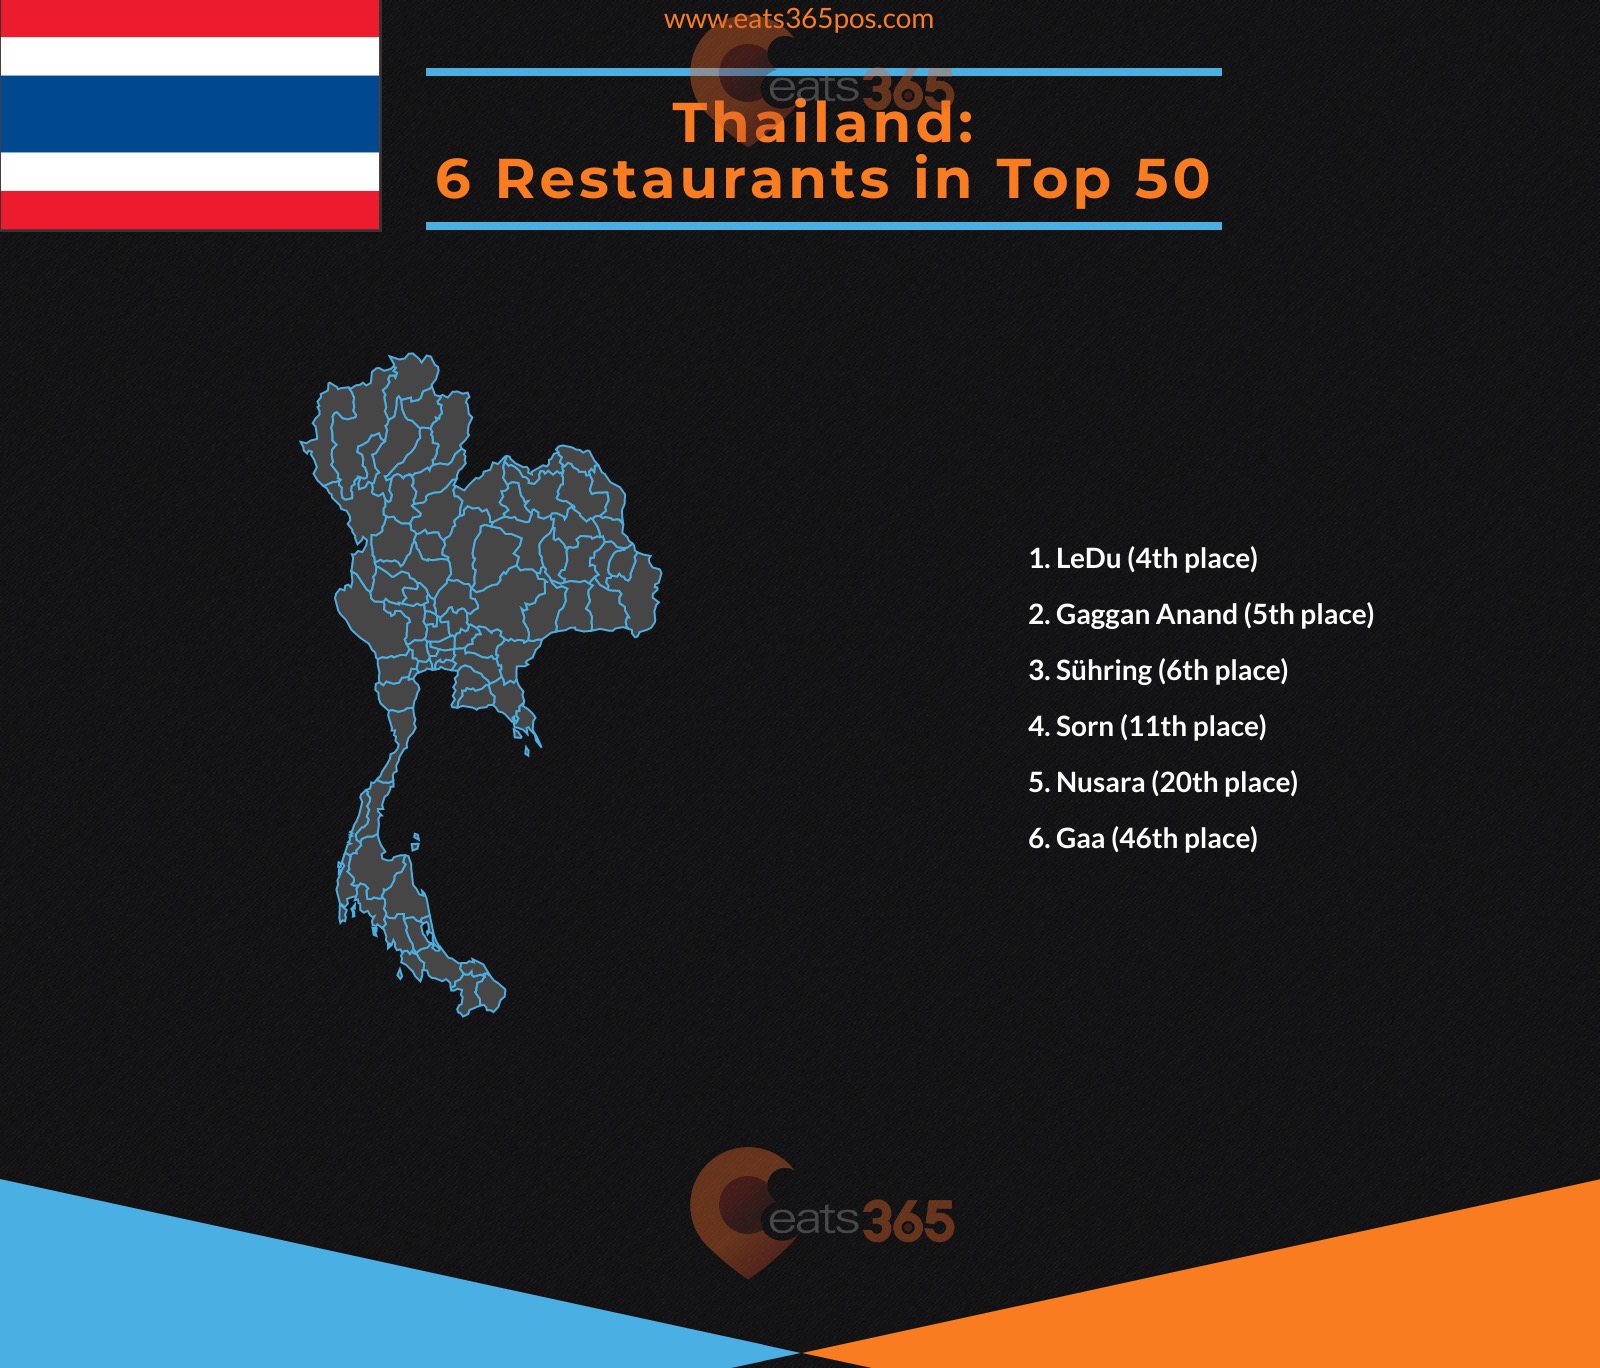 Thailand's top 6 restaurants infographic